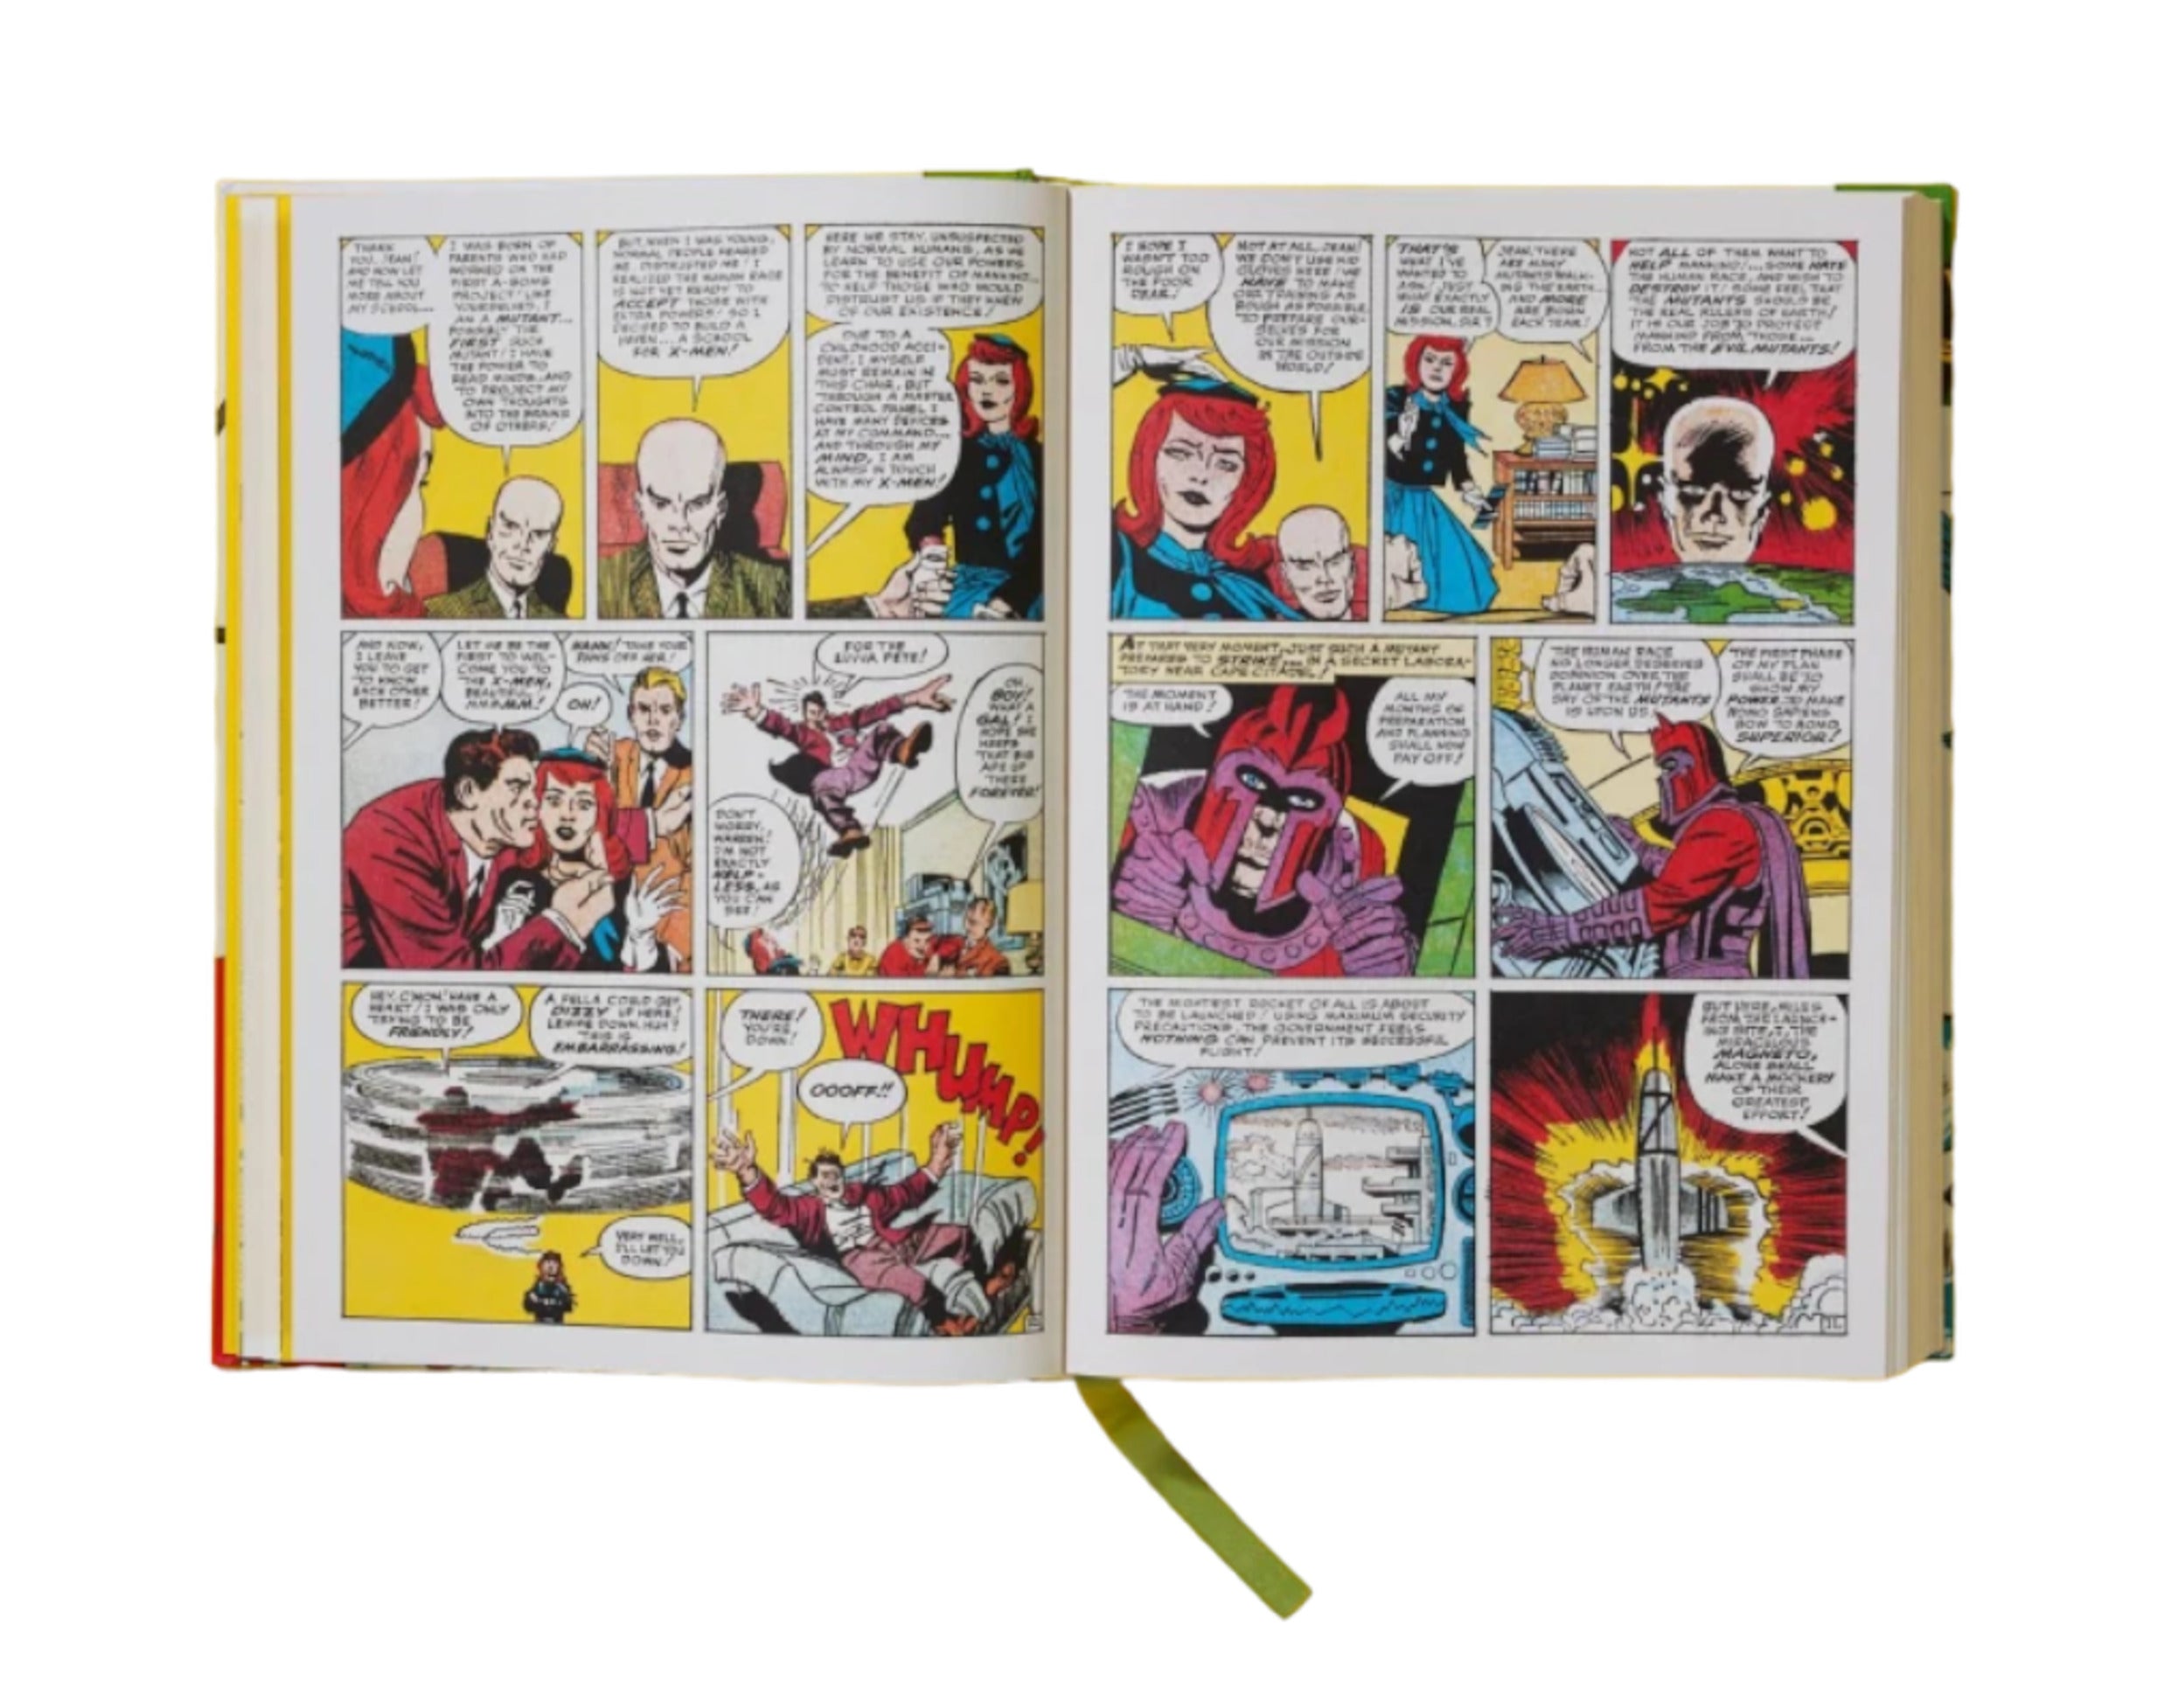 TASCHEN Books: Marvel Comics Library. X-Men. Vol. 1. 1963–1966